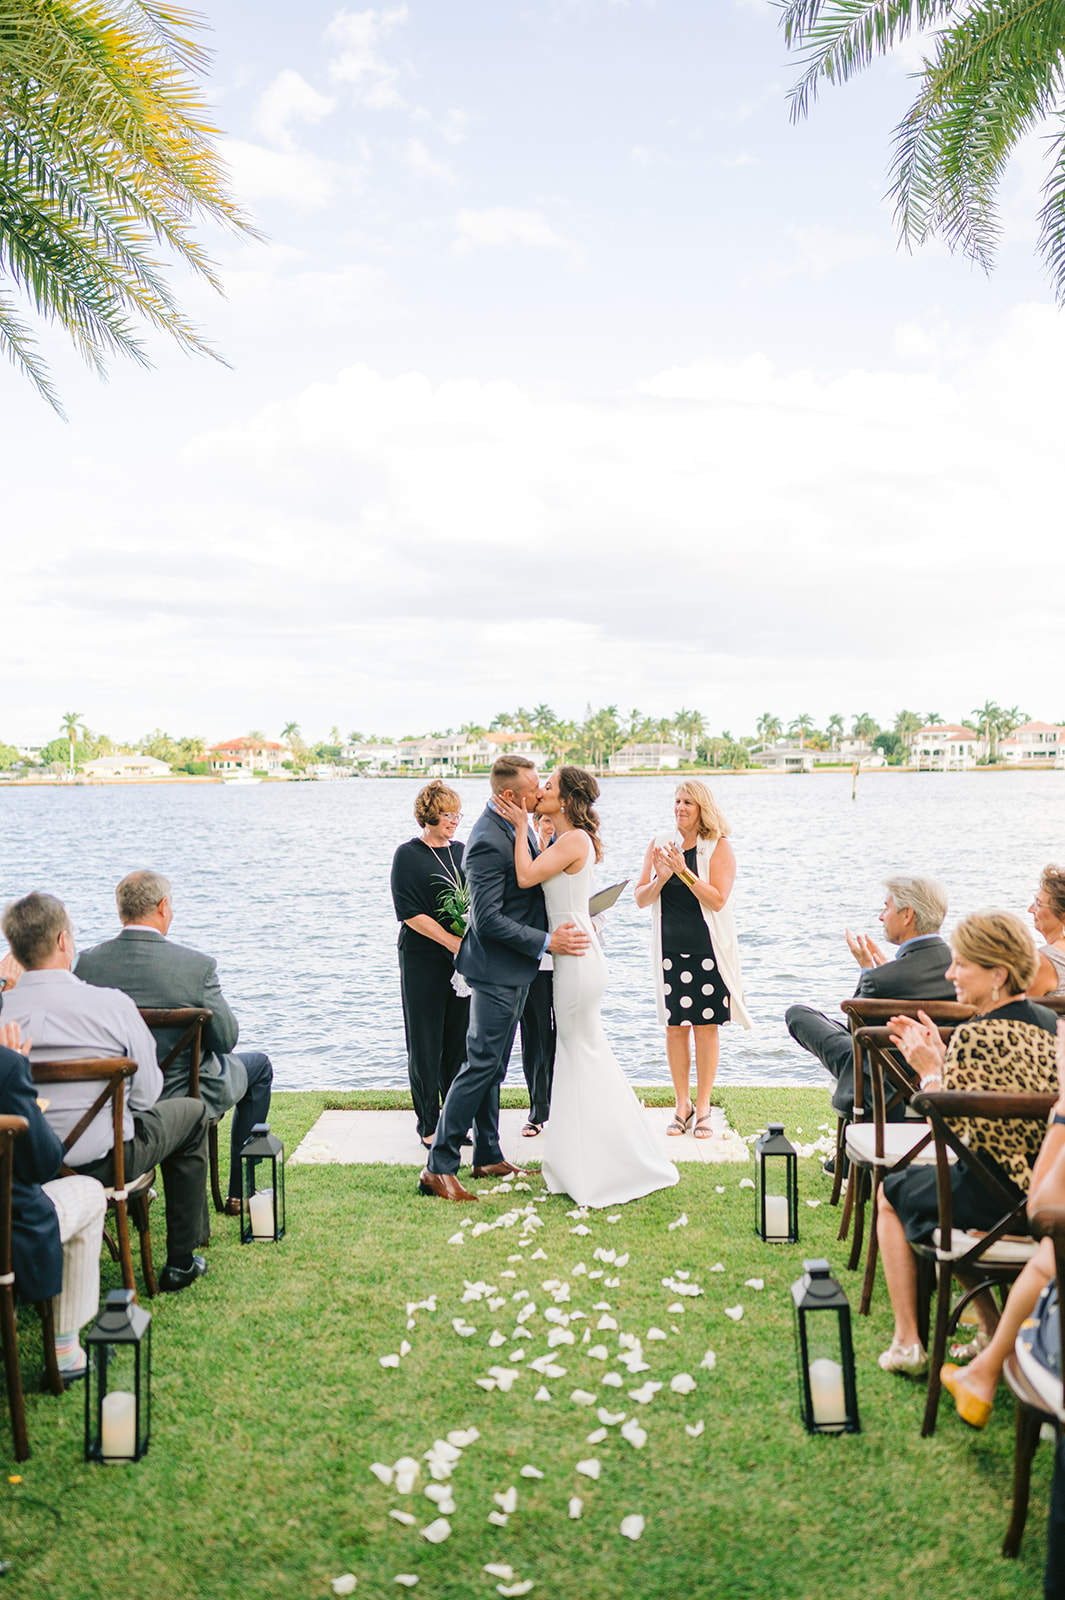 Naples FL wedding photographer captures the wedding reception venue
